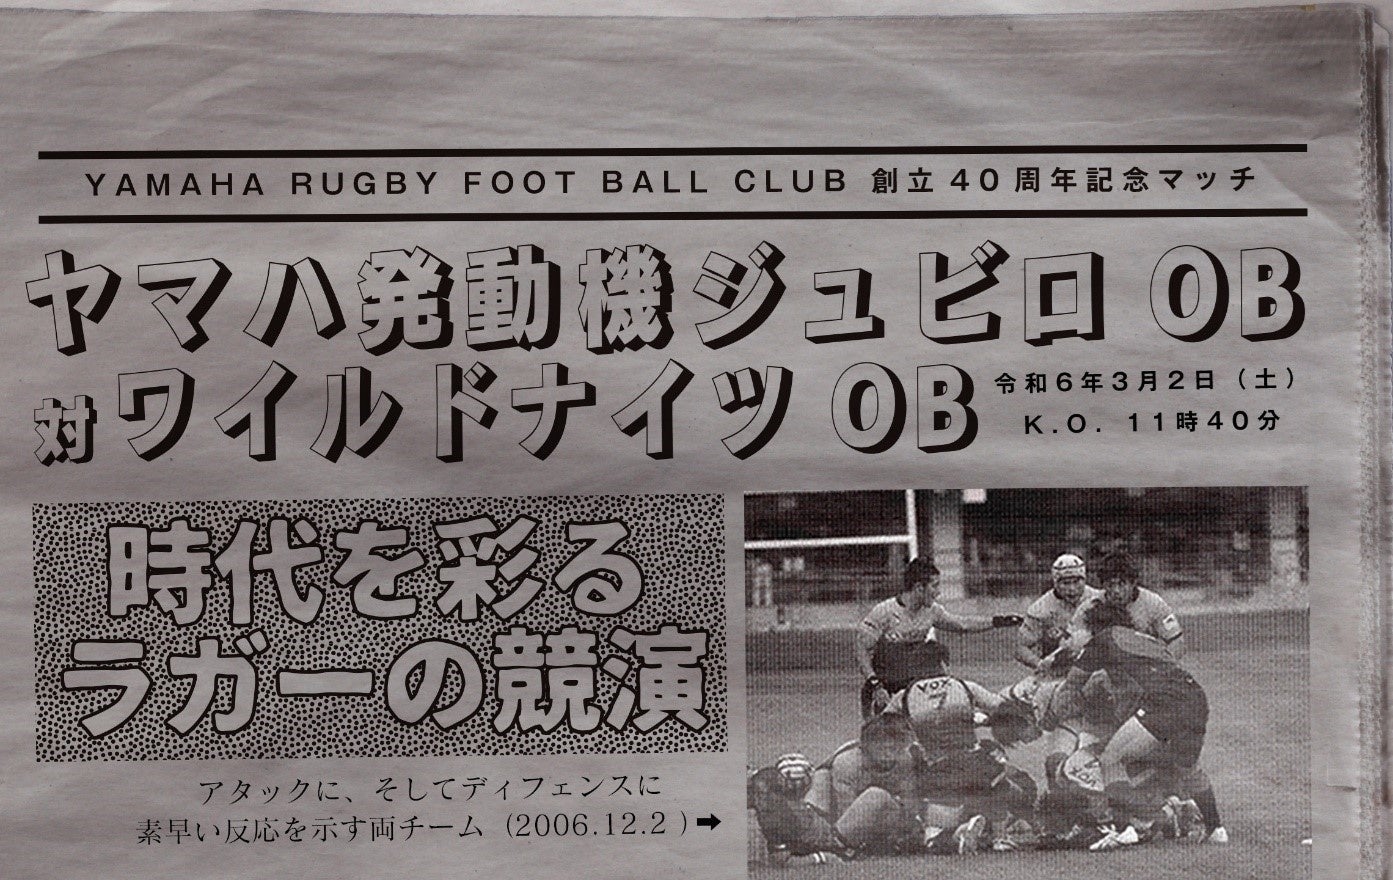 YAMAHA RUGBY FOOTBALL CLUB 創立40周年記念マッチ開催のお知らせ